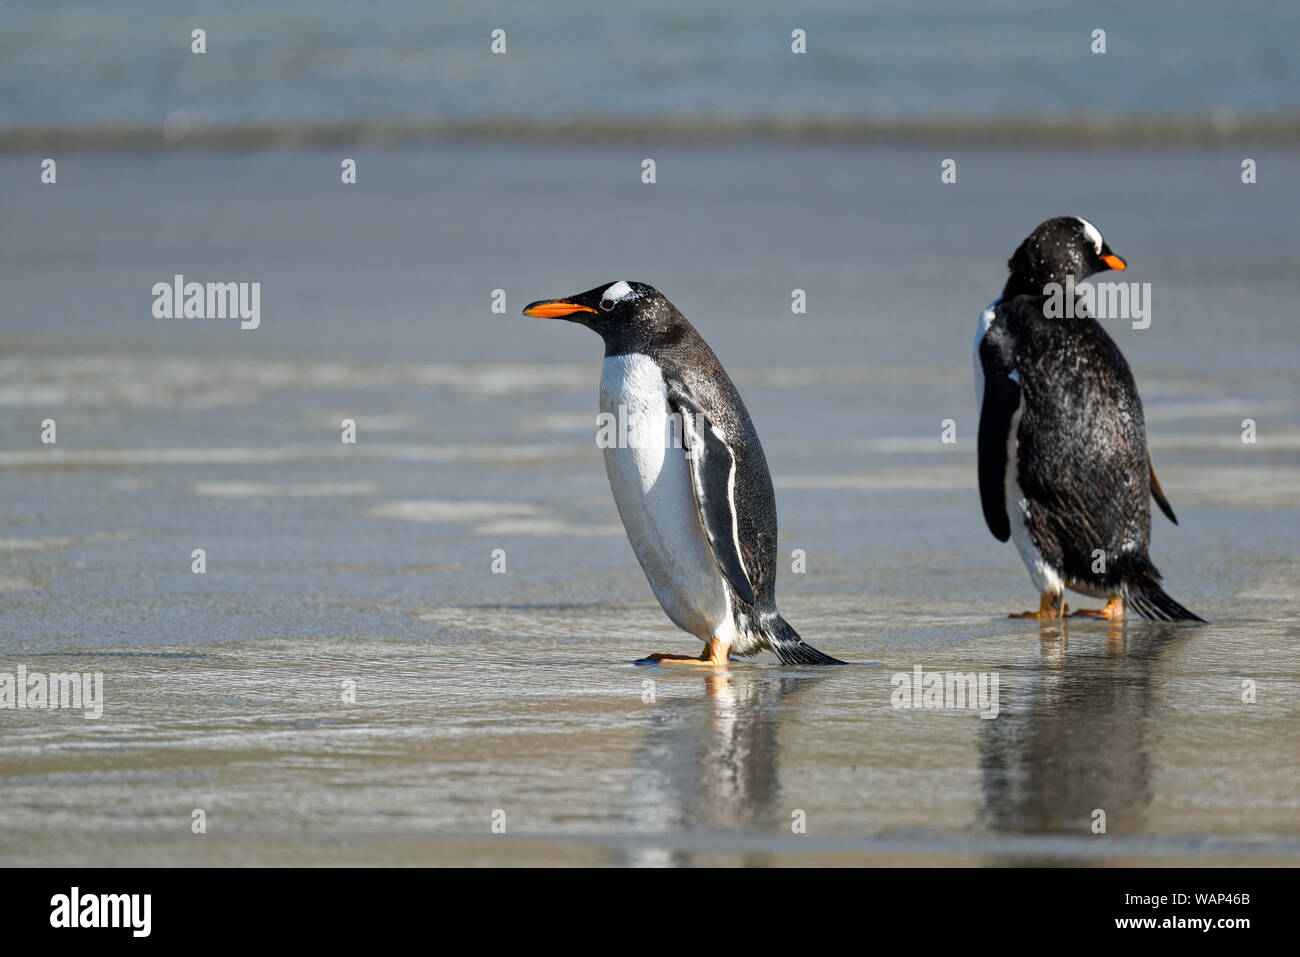 Zwei Eselspinguine (Pygoscelis papua) am Strand, Islas Malvinas. Dos pingüinos gentoo oh la playa, Islas Malvinas Foto de stock